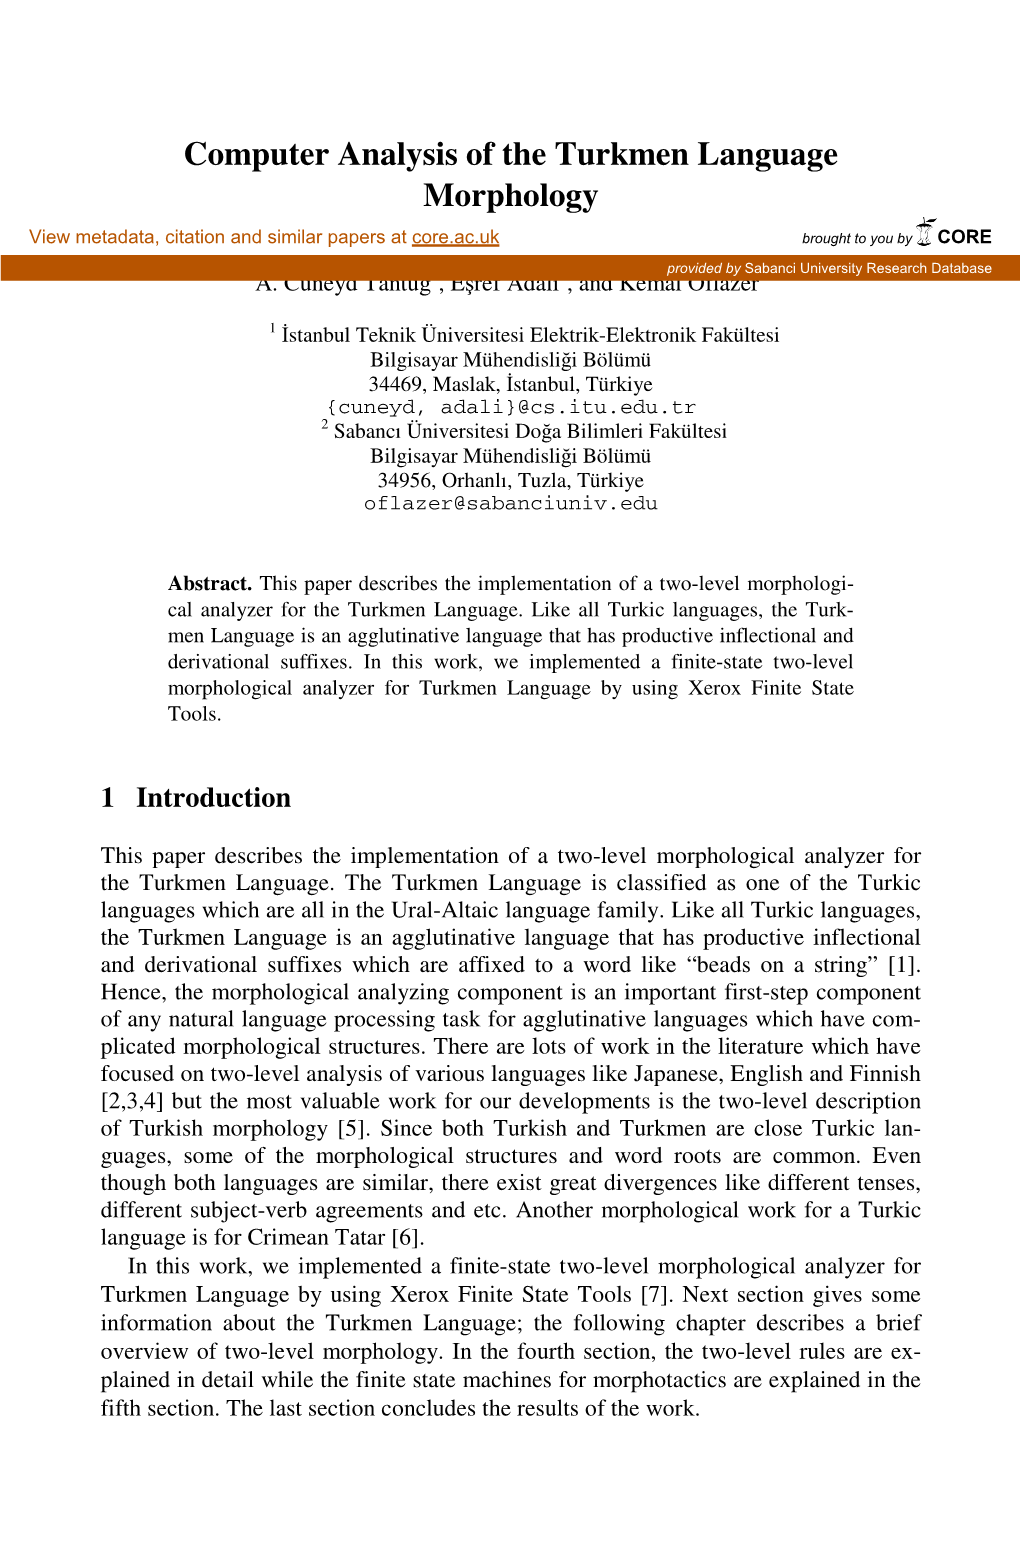 Computer Analysis of the Turkmen Language Morphology